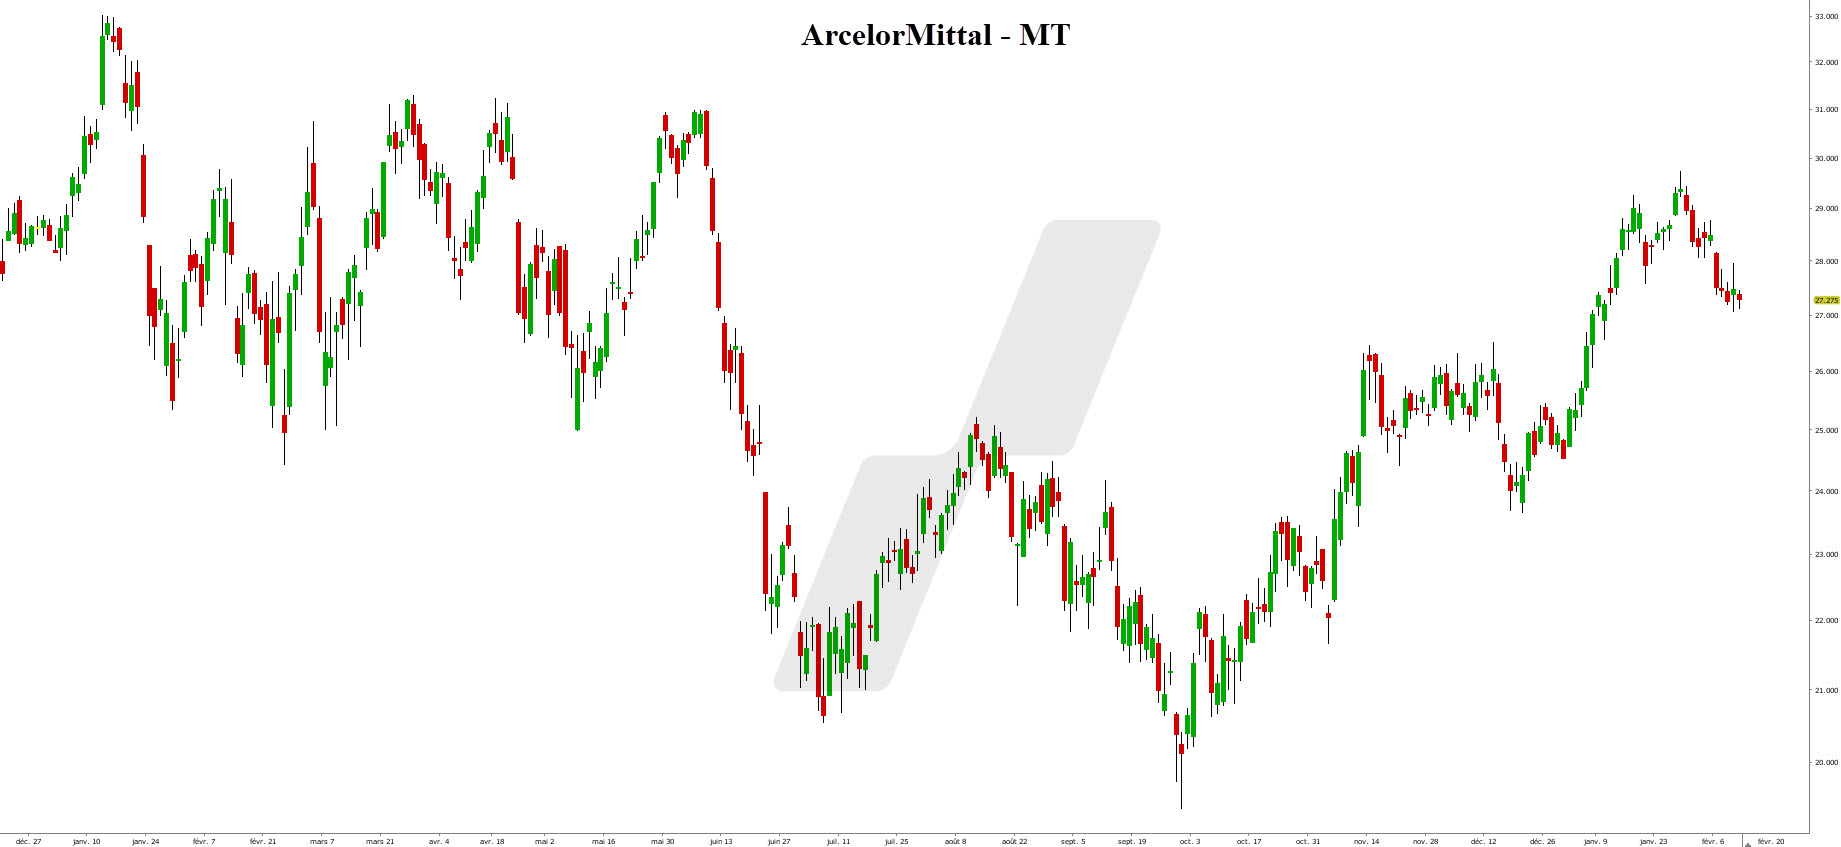 meilleures actions - graphique ArcelorMittal